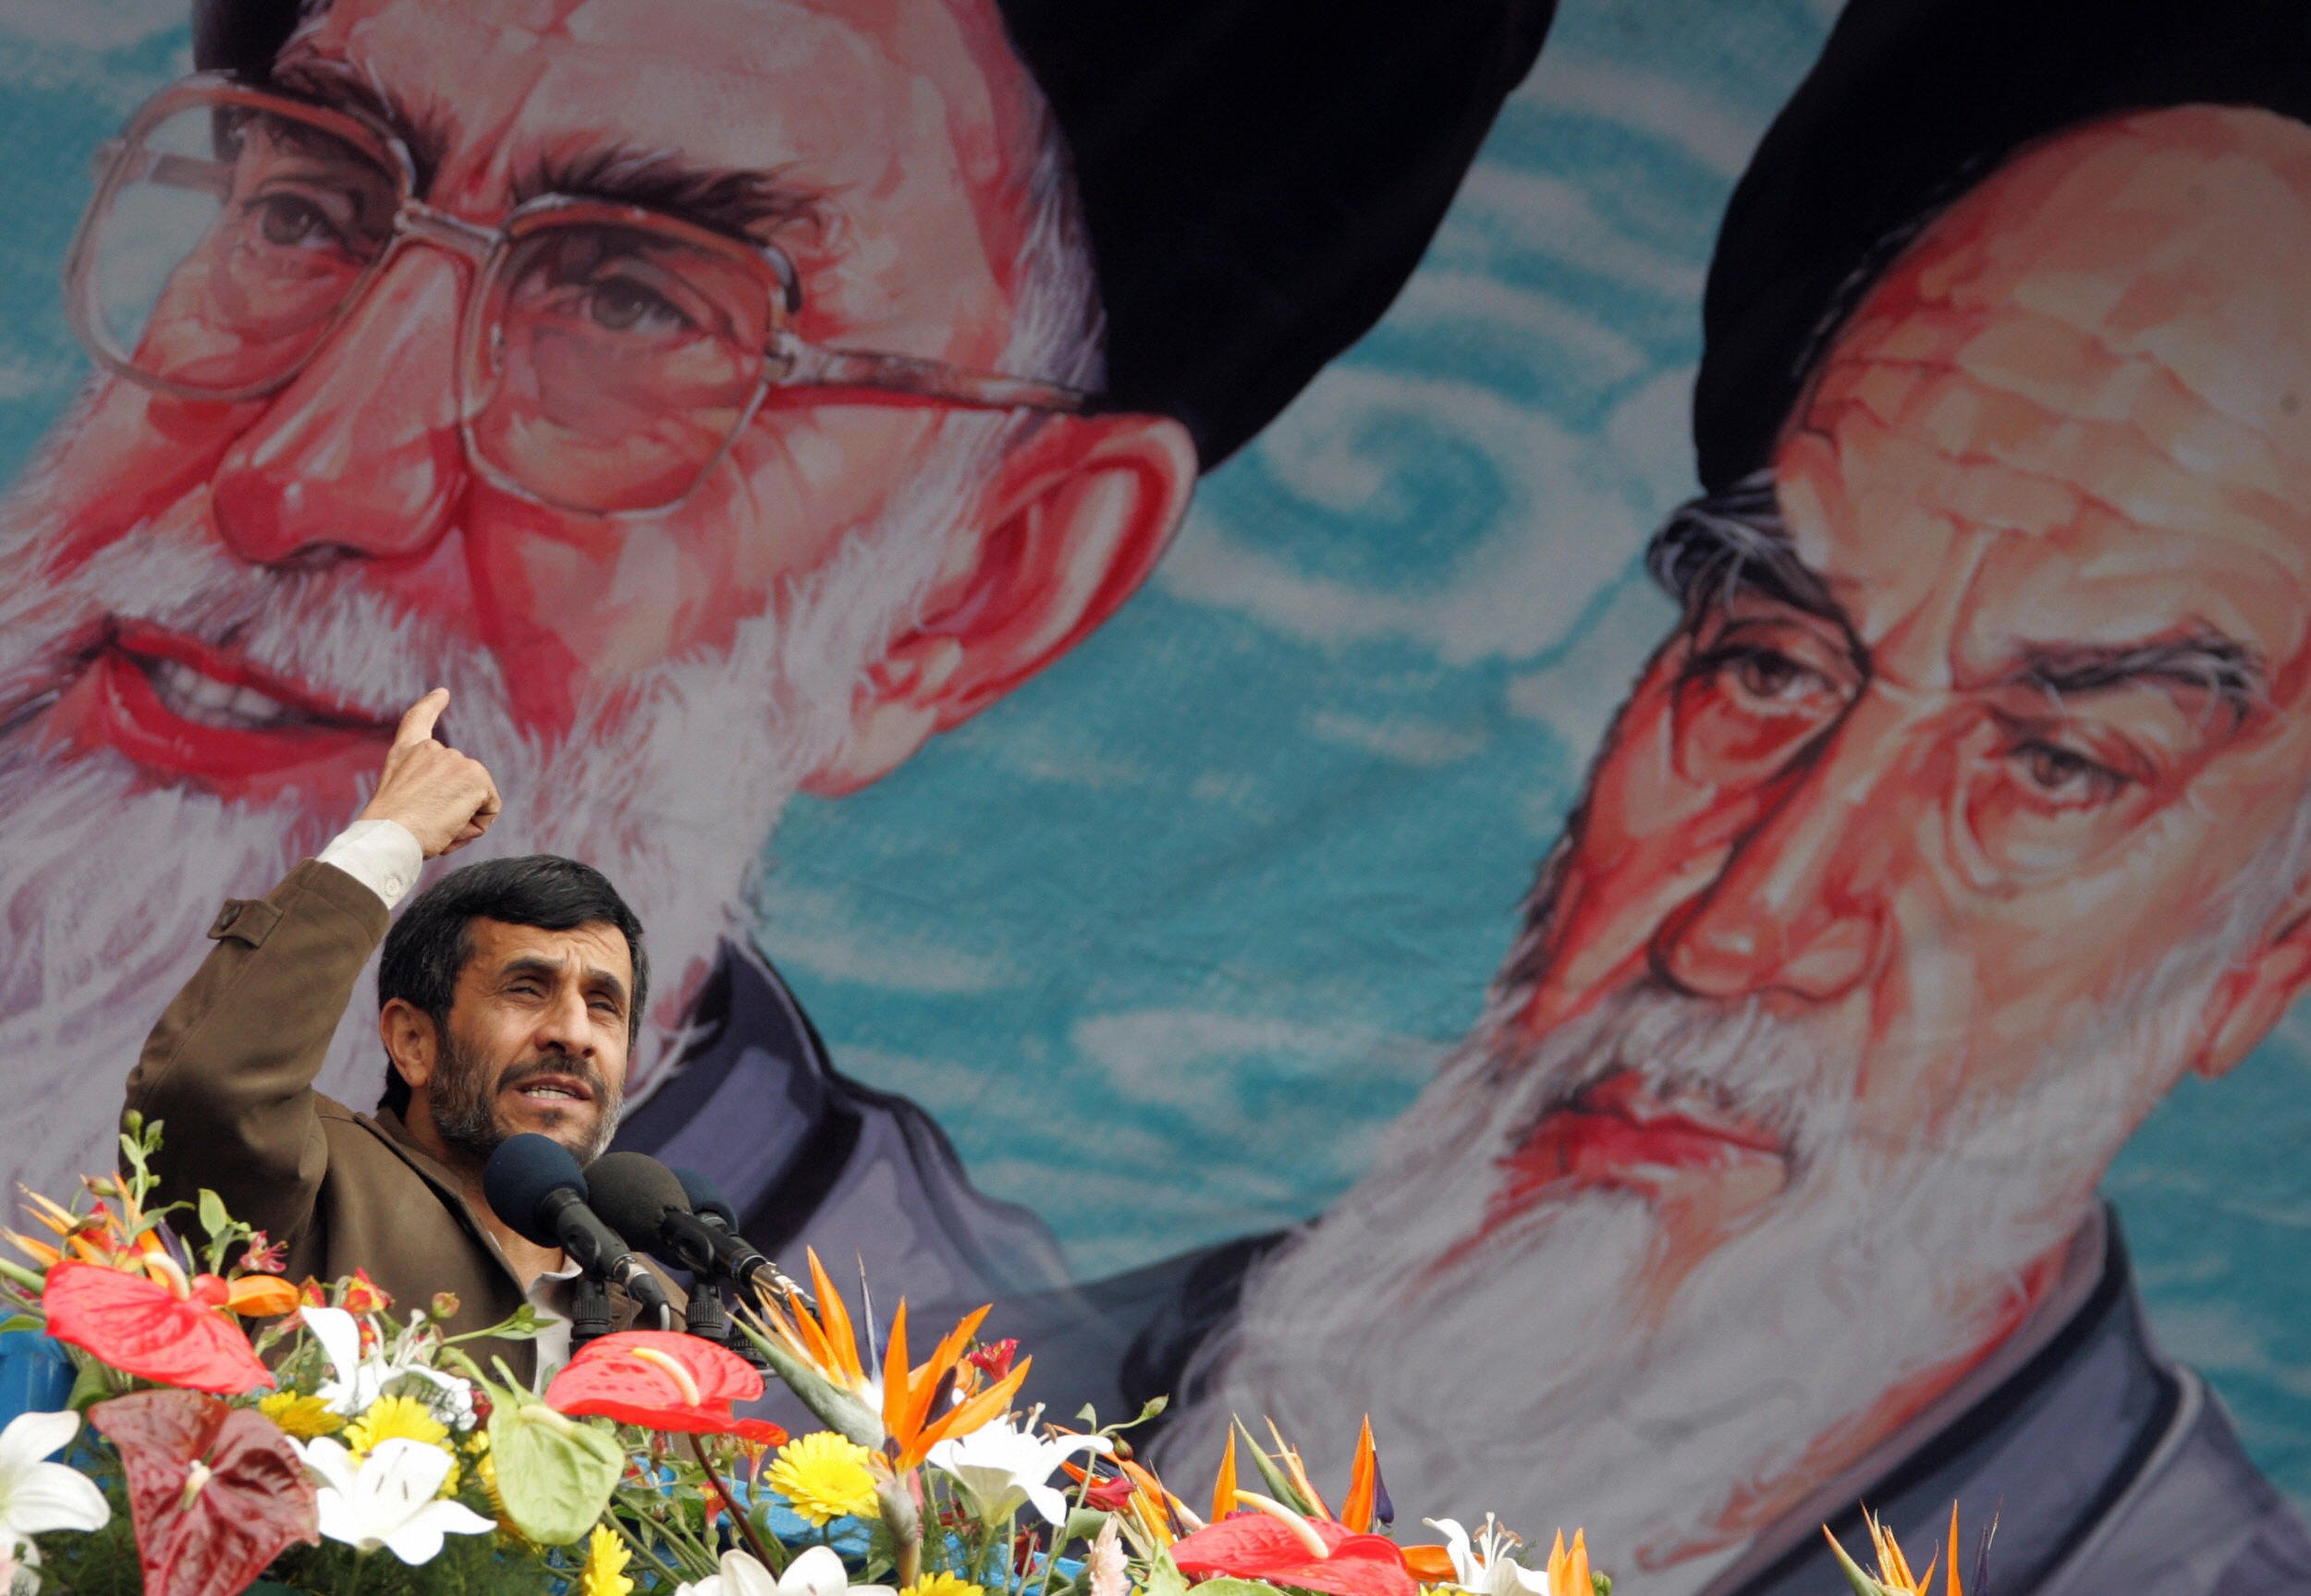 Former Iranian President Mahmoud Ahmadinejad